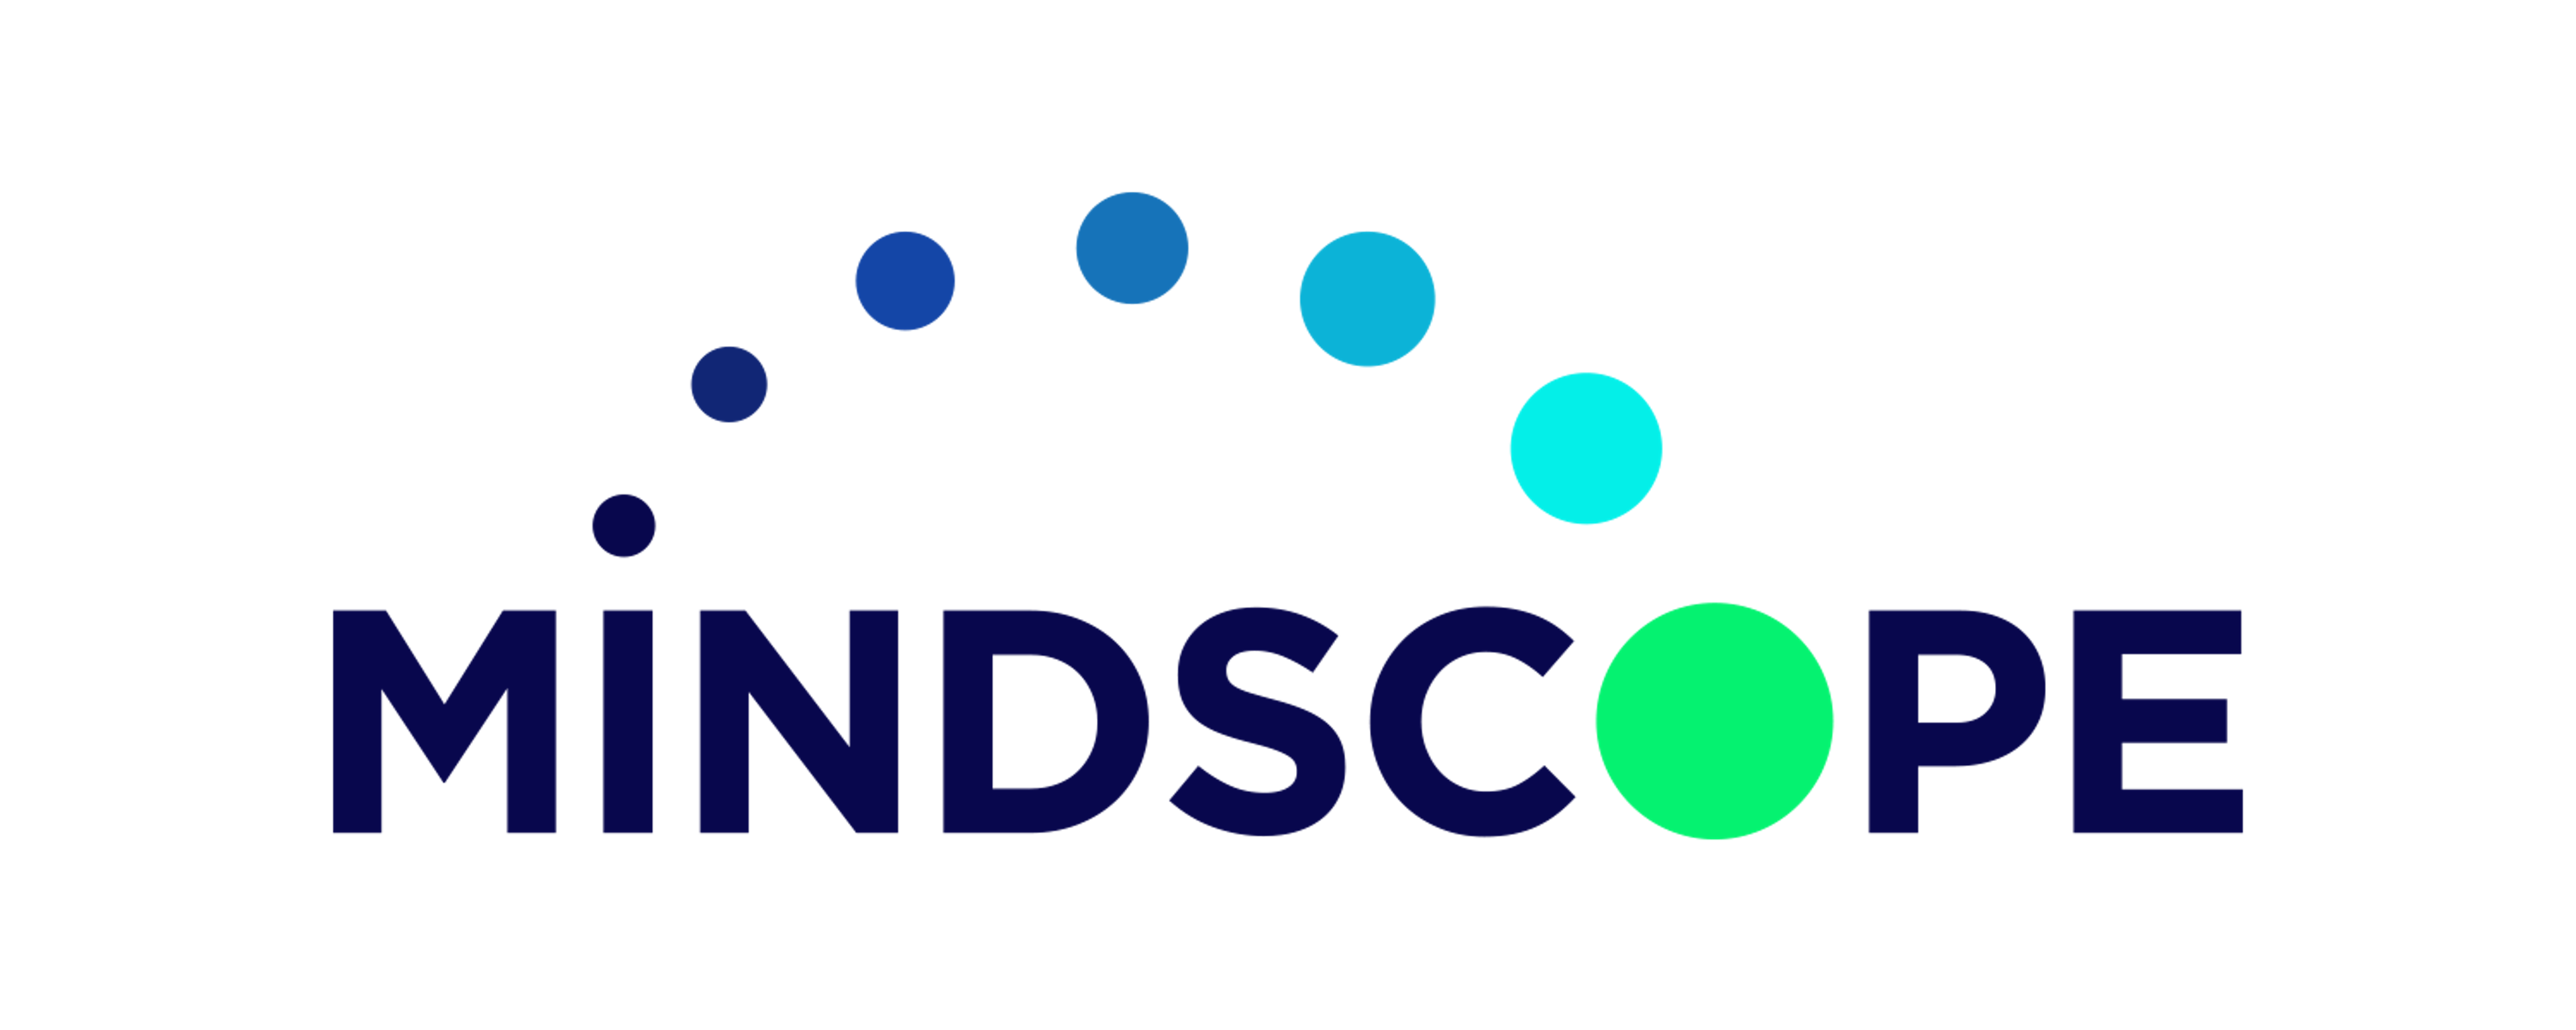 Mindscope Logo